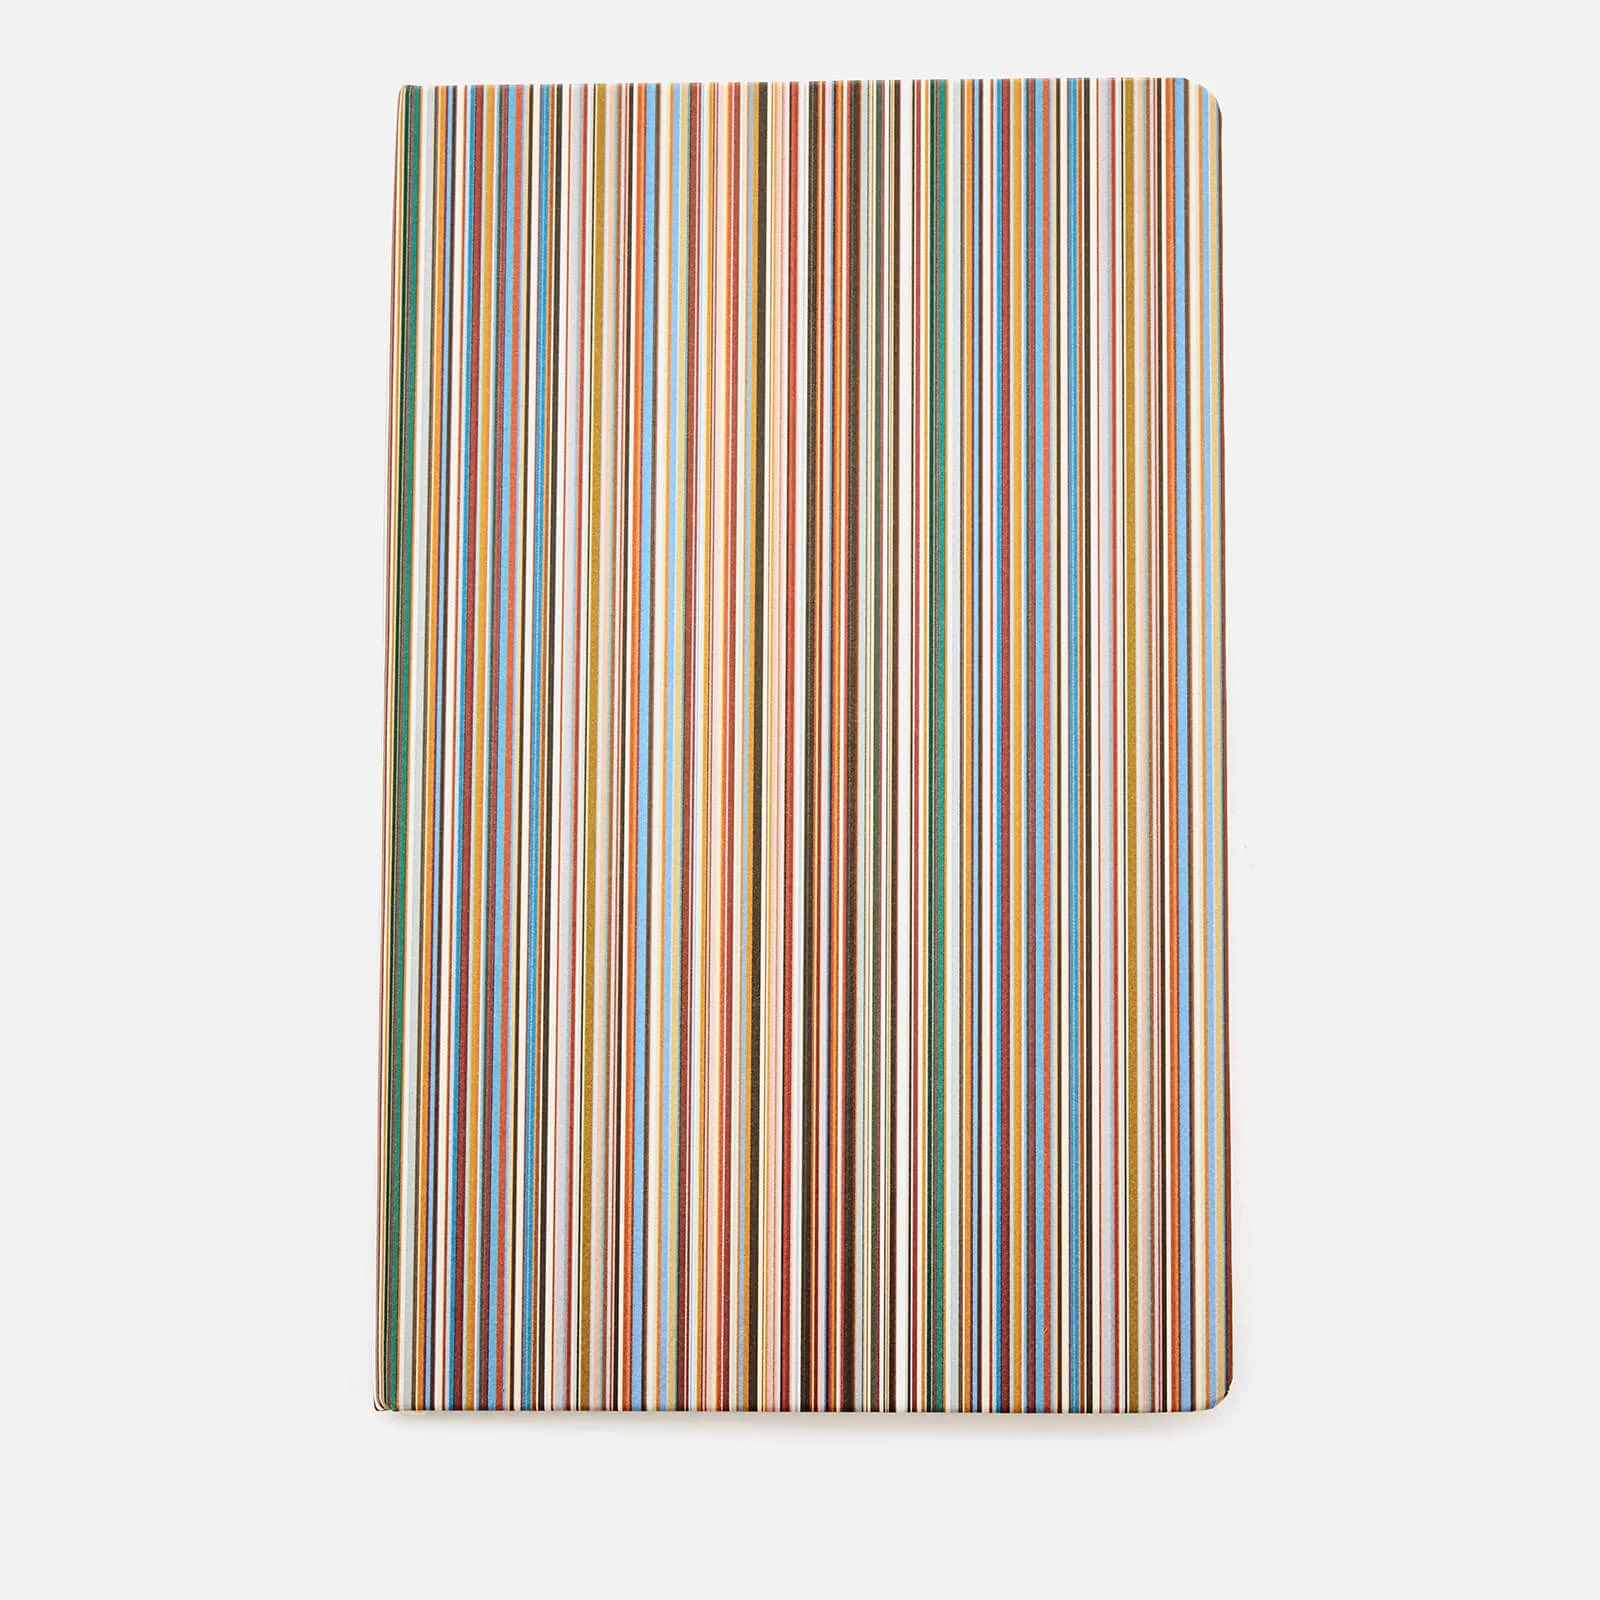 Paul Smith Men's Medium Notebook - Stripe Image 1